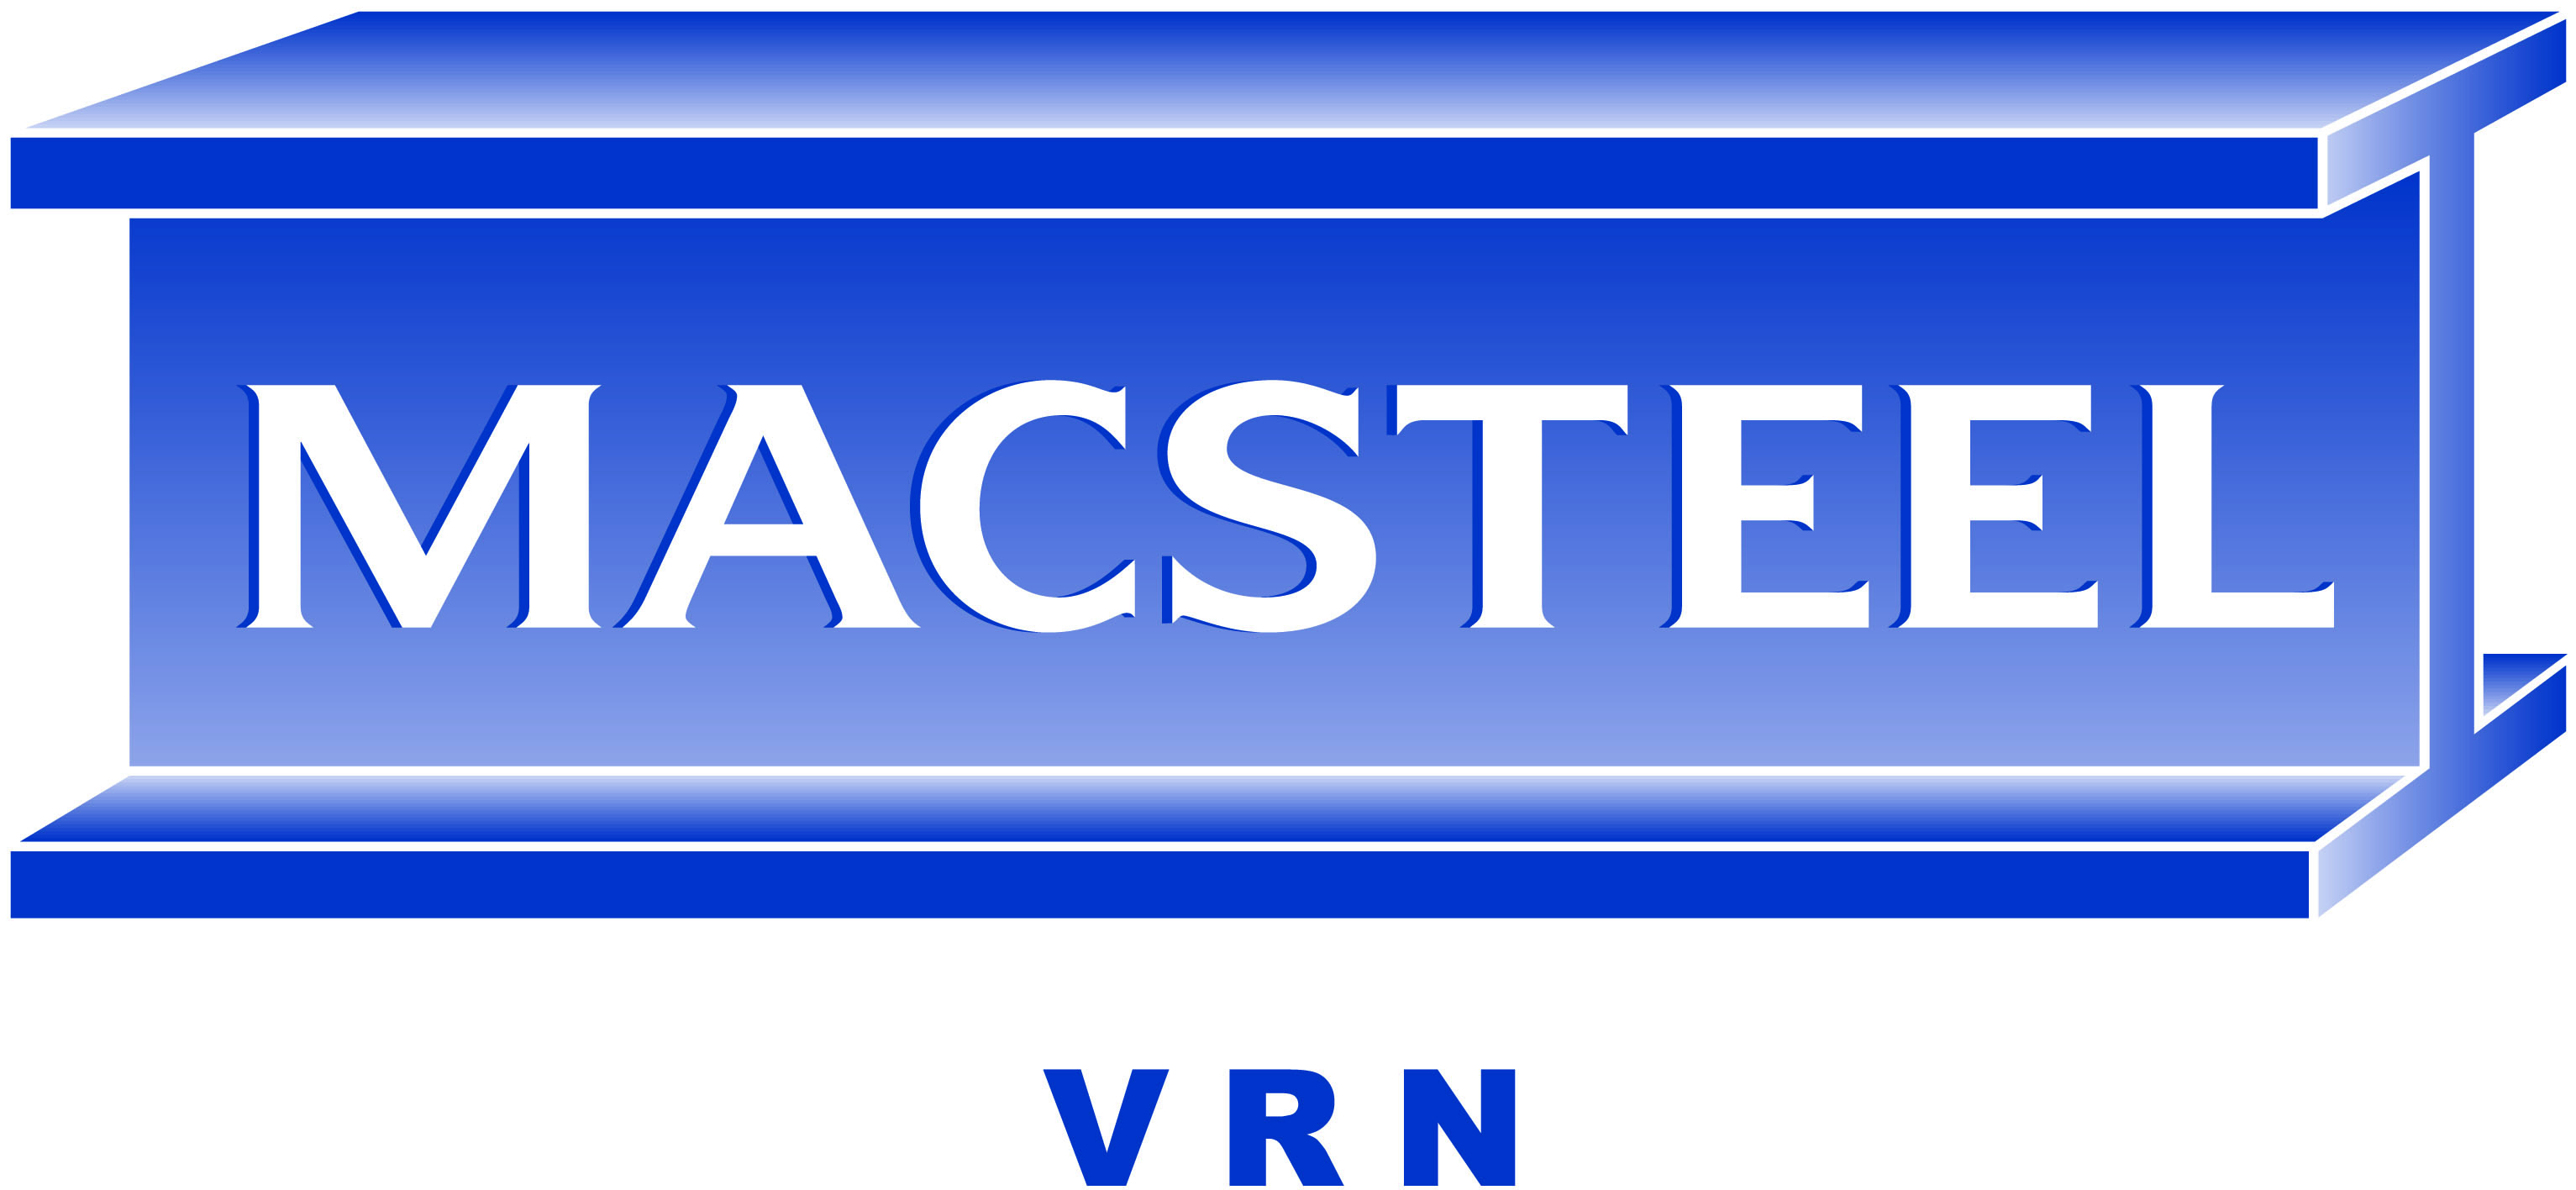 Macsteel Vrn- Richards Bay logo